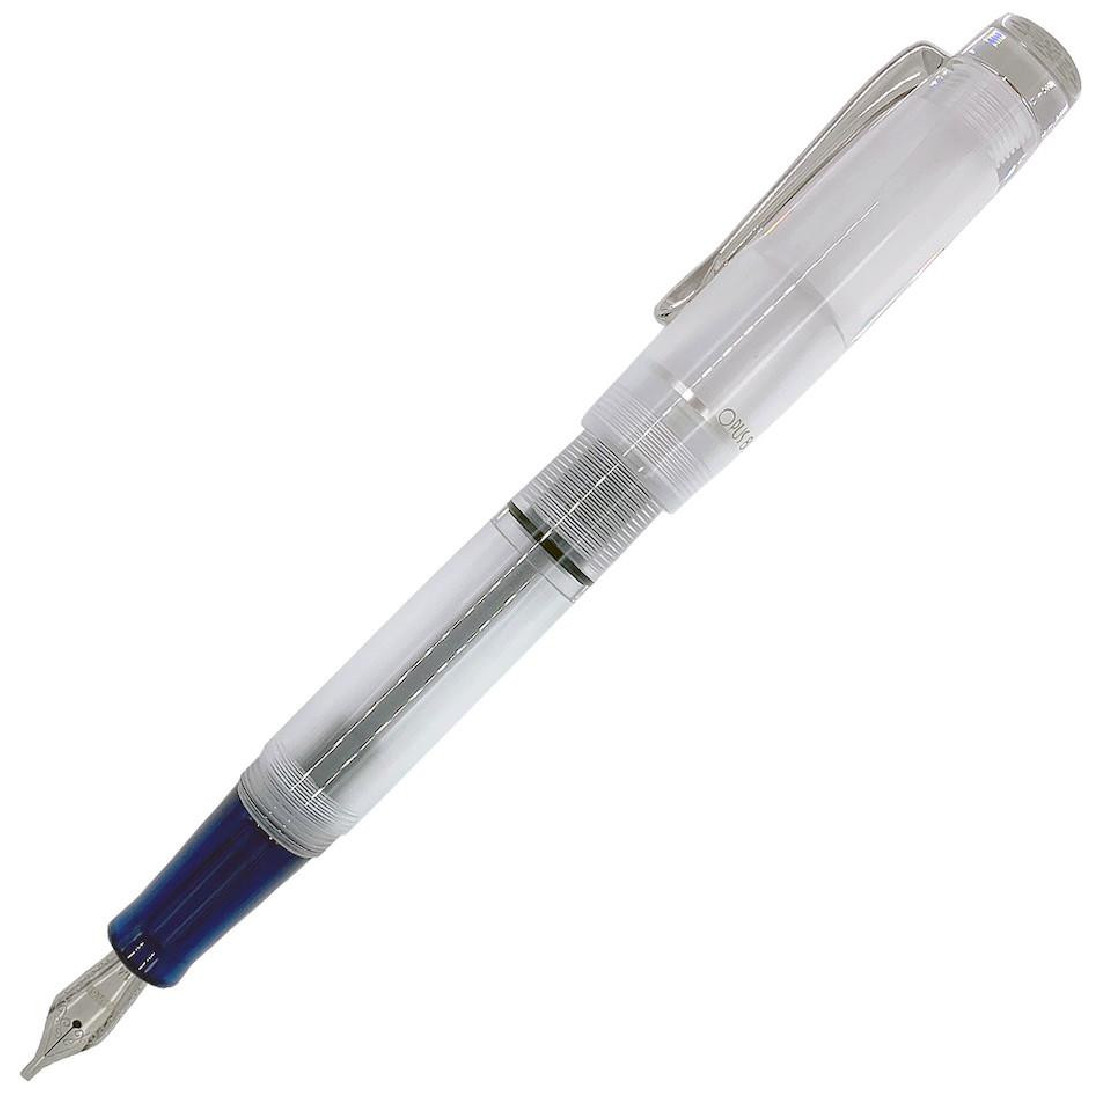 Opus 88 Halo Clear (blue grip) Fountain pen